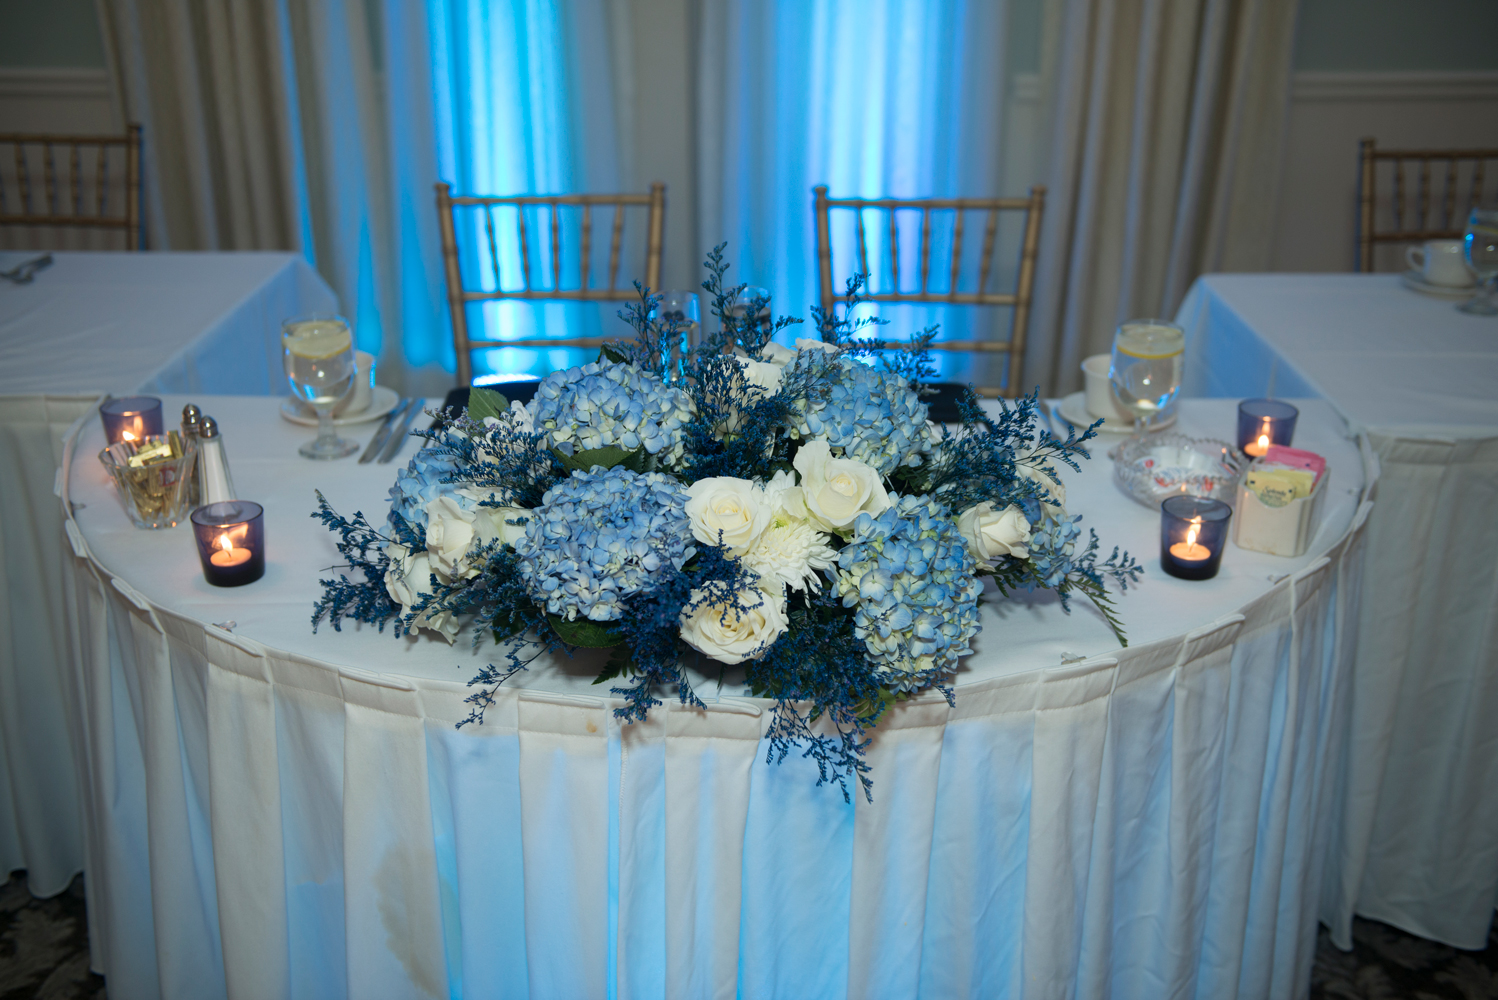 Wedding Wireless LED Uplighting Under Table Chocksett Inn Ballroom April 19, 2014 - 1